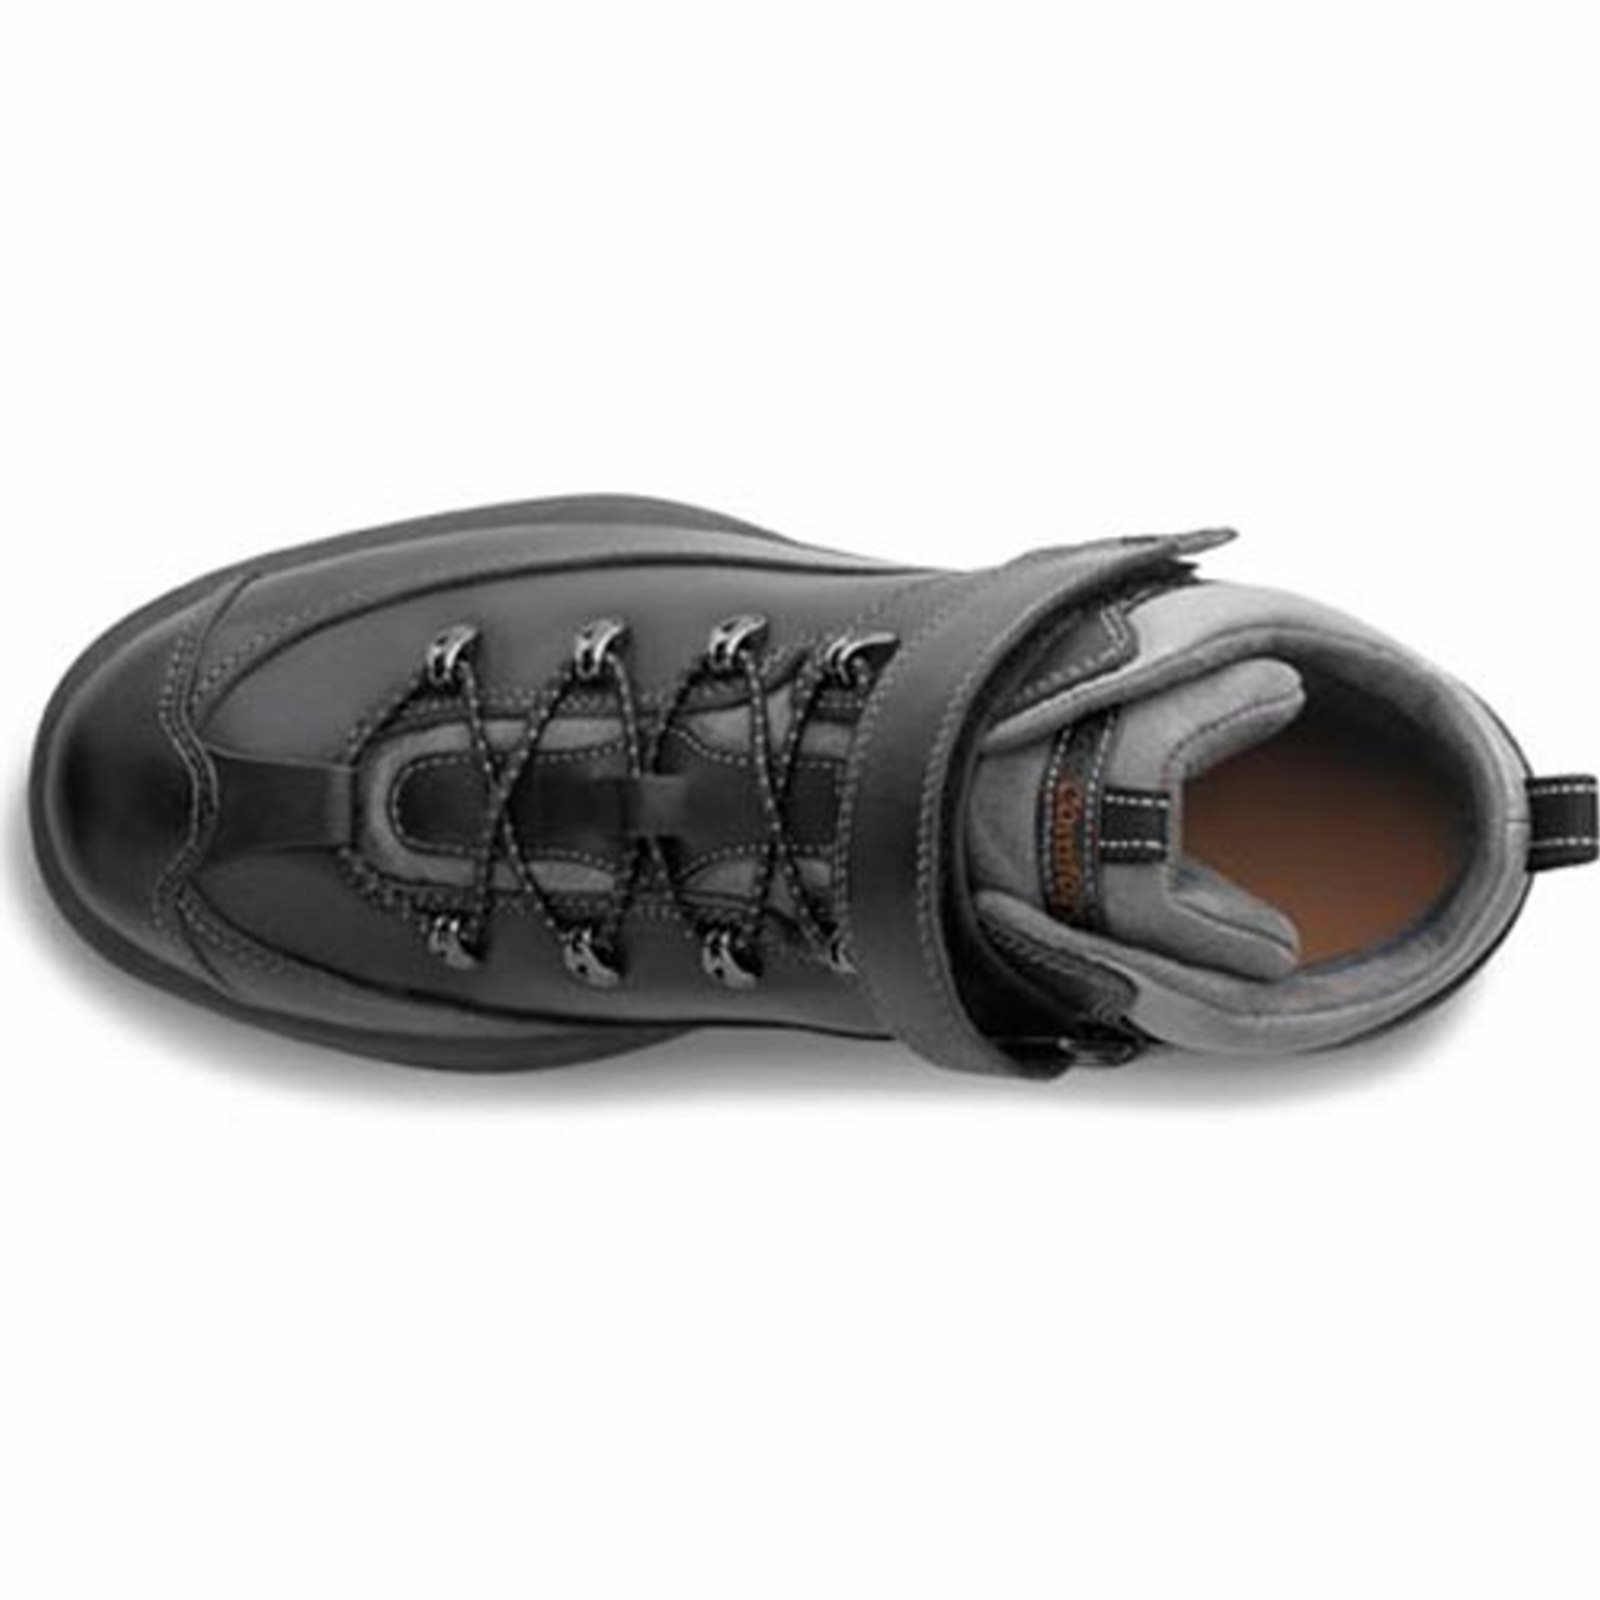 Dr. Comfort Ranger Men's Hiking Boot: 6 Medium (B/D) Black Elastic Lace w/Strap - image 3 of 4